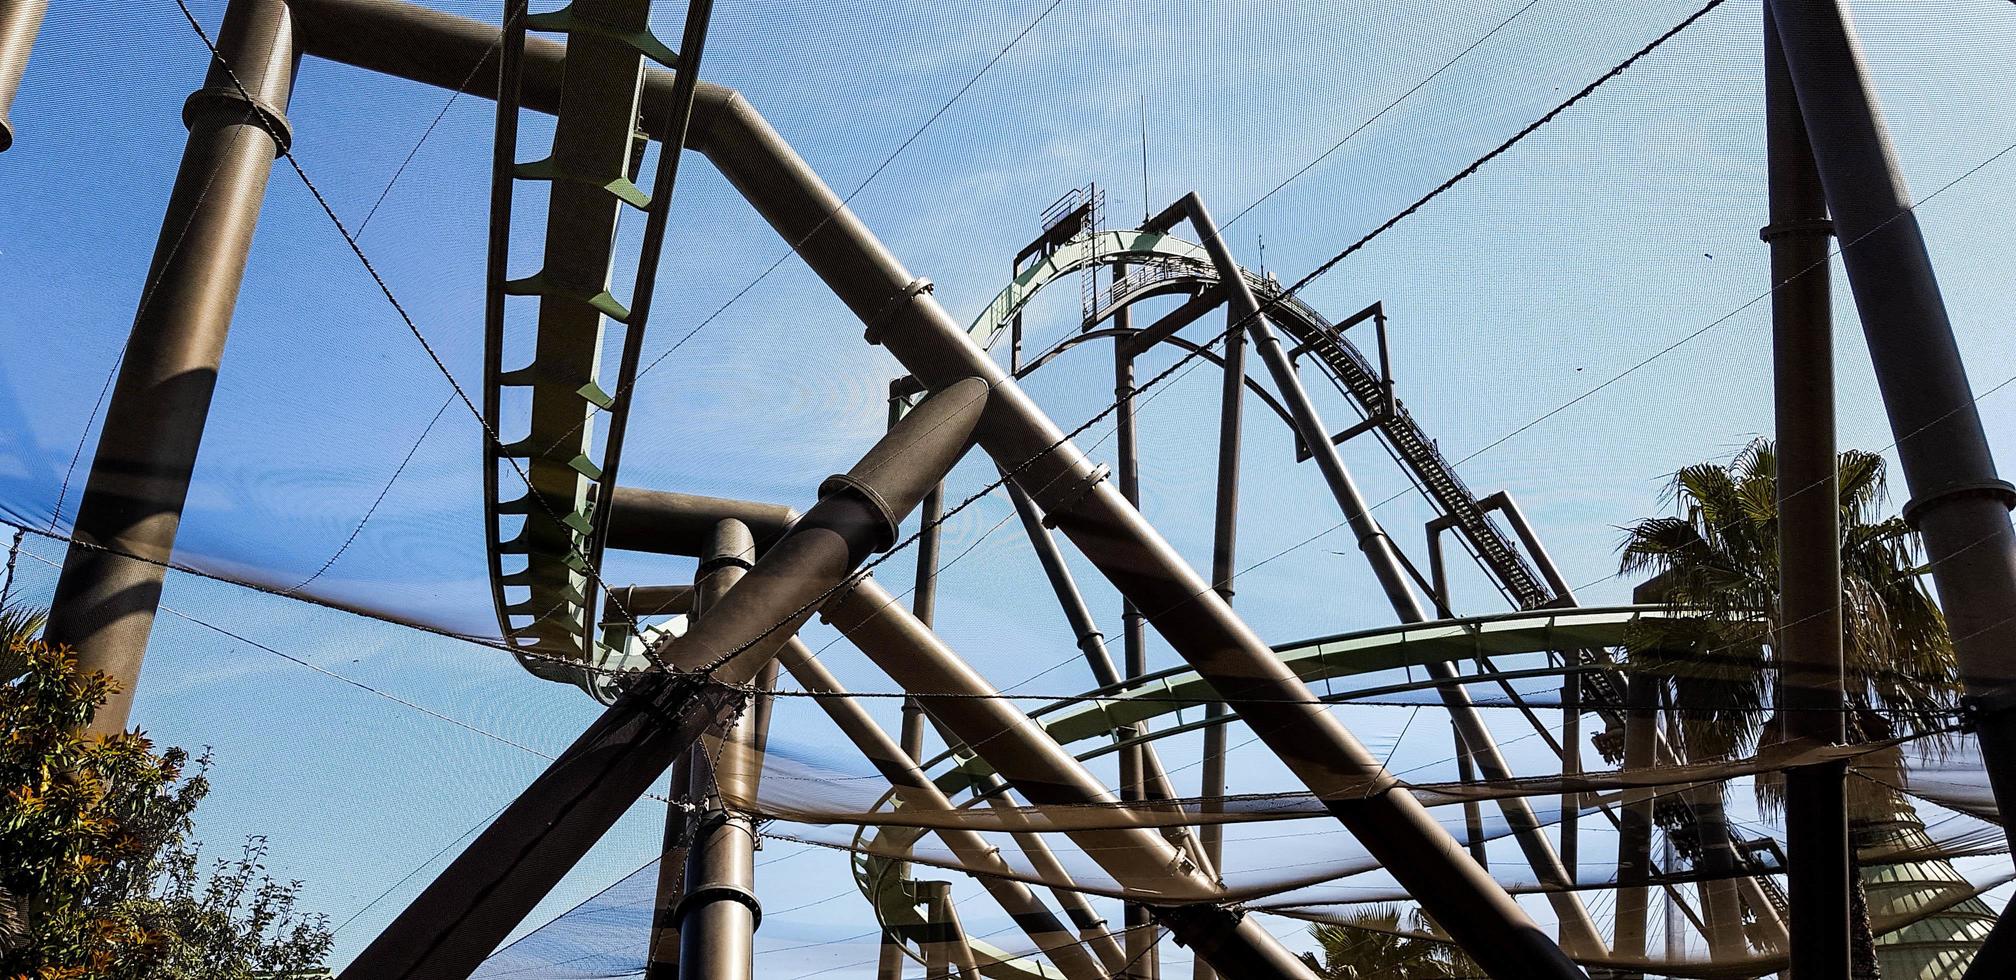 Osaka, Japan, 2019 - Extremely extreme roller coaster ride at Universal Studios Japan. photo